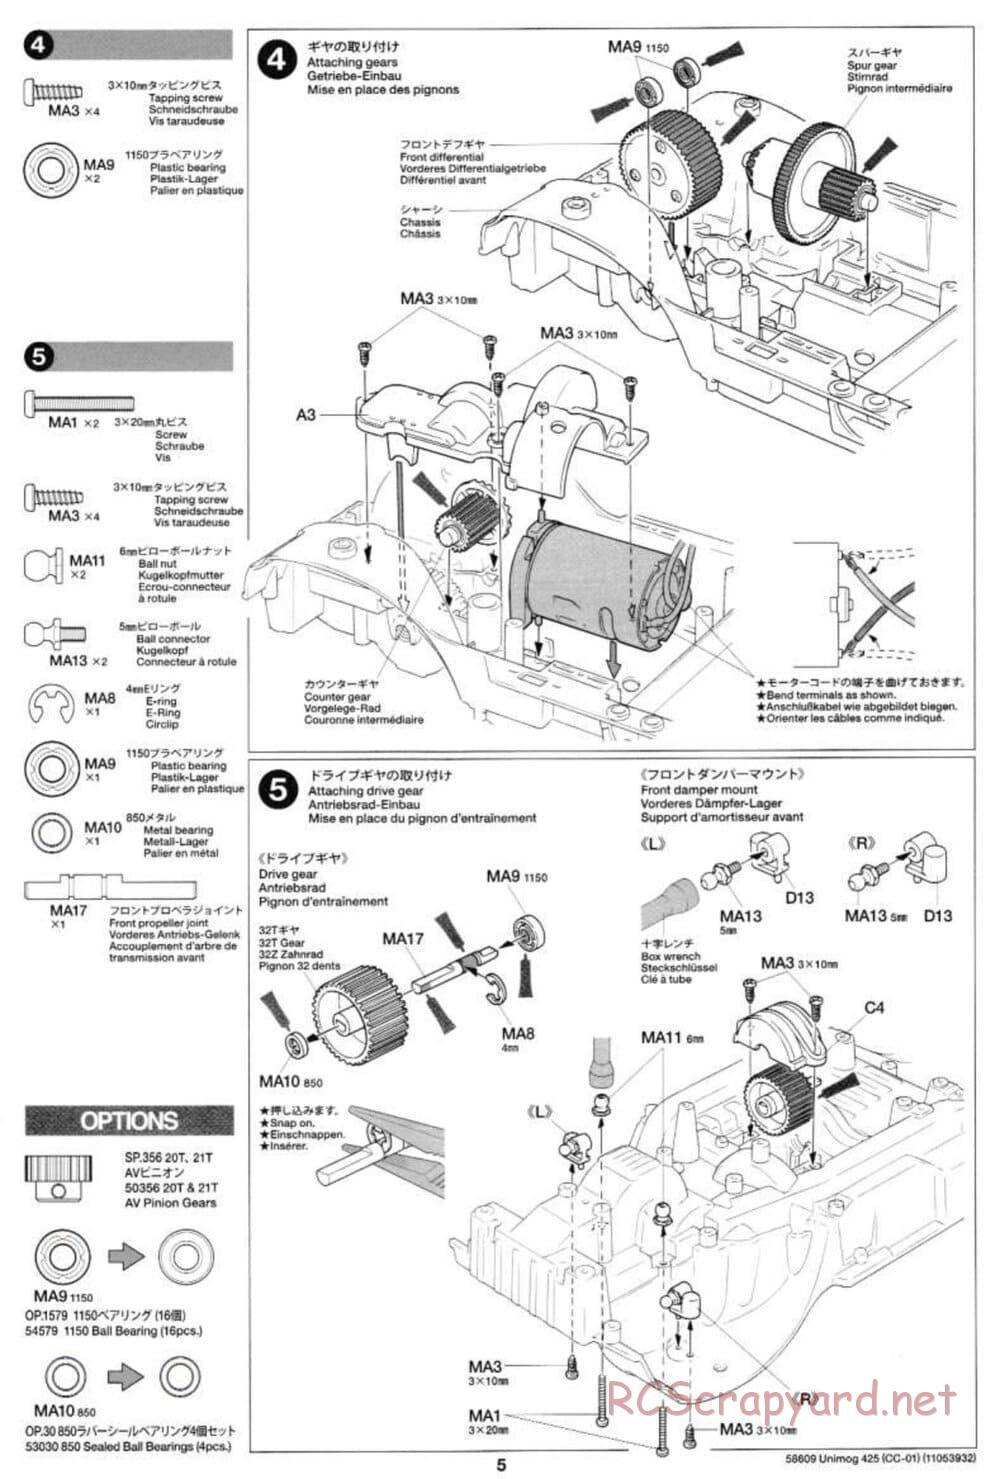 Tamiya - Mercedes-Benz Unimog 425 - CC-01 Chassis - Manual - Page 5